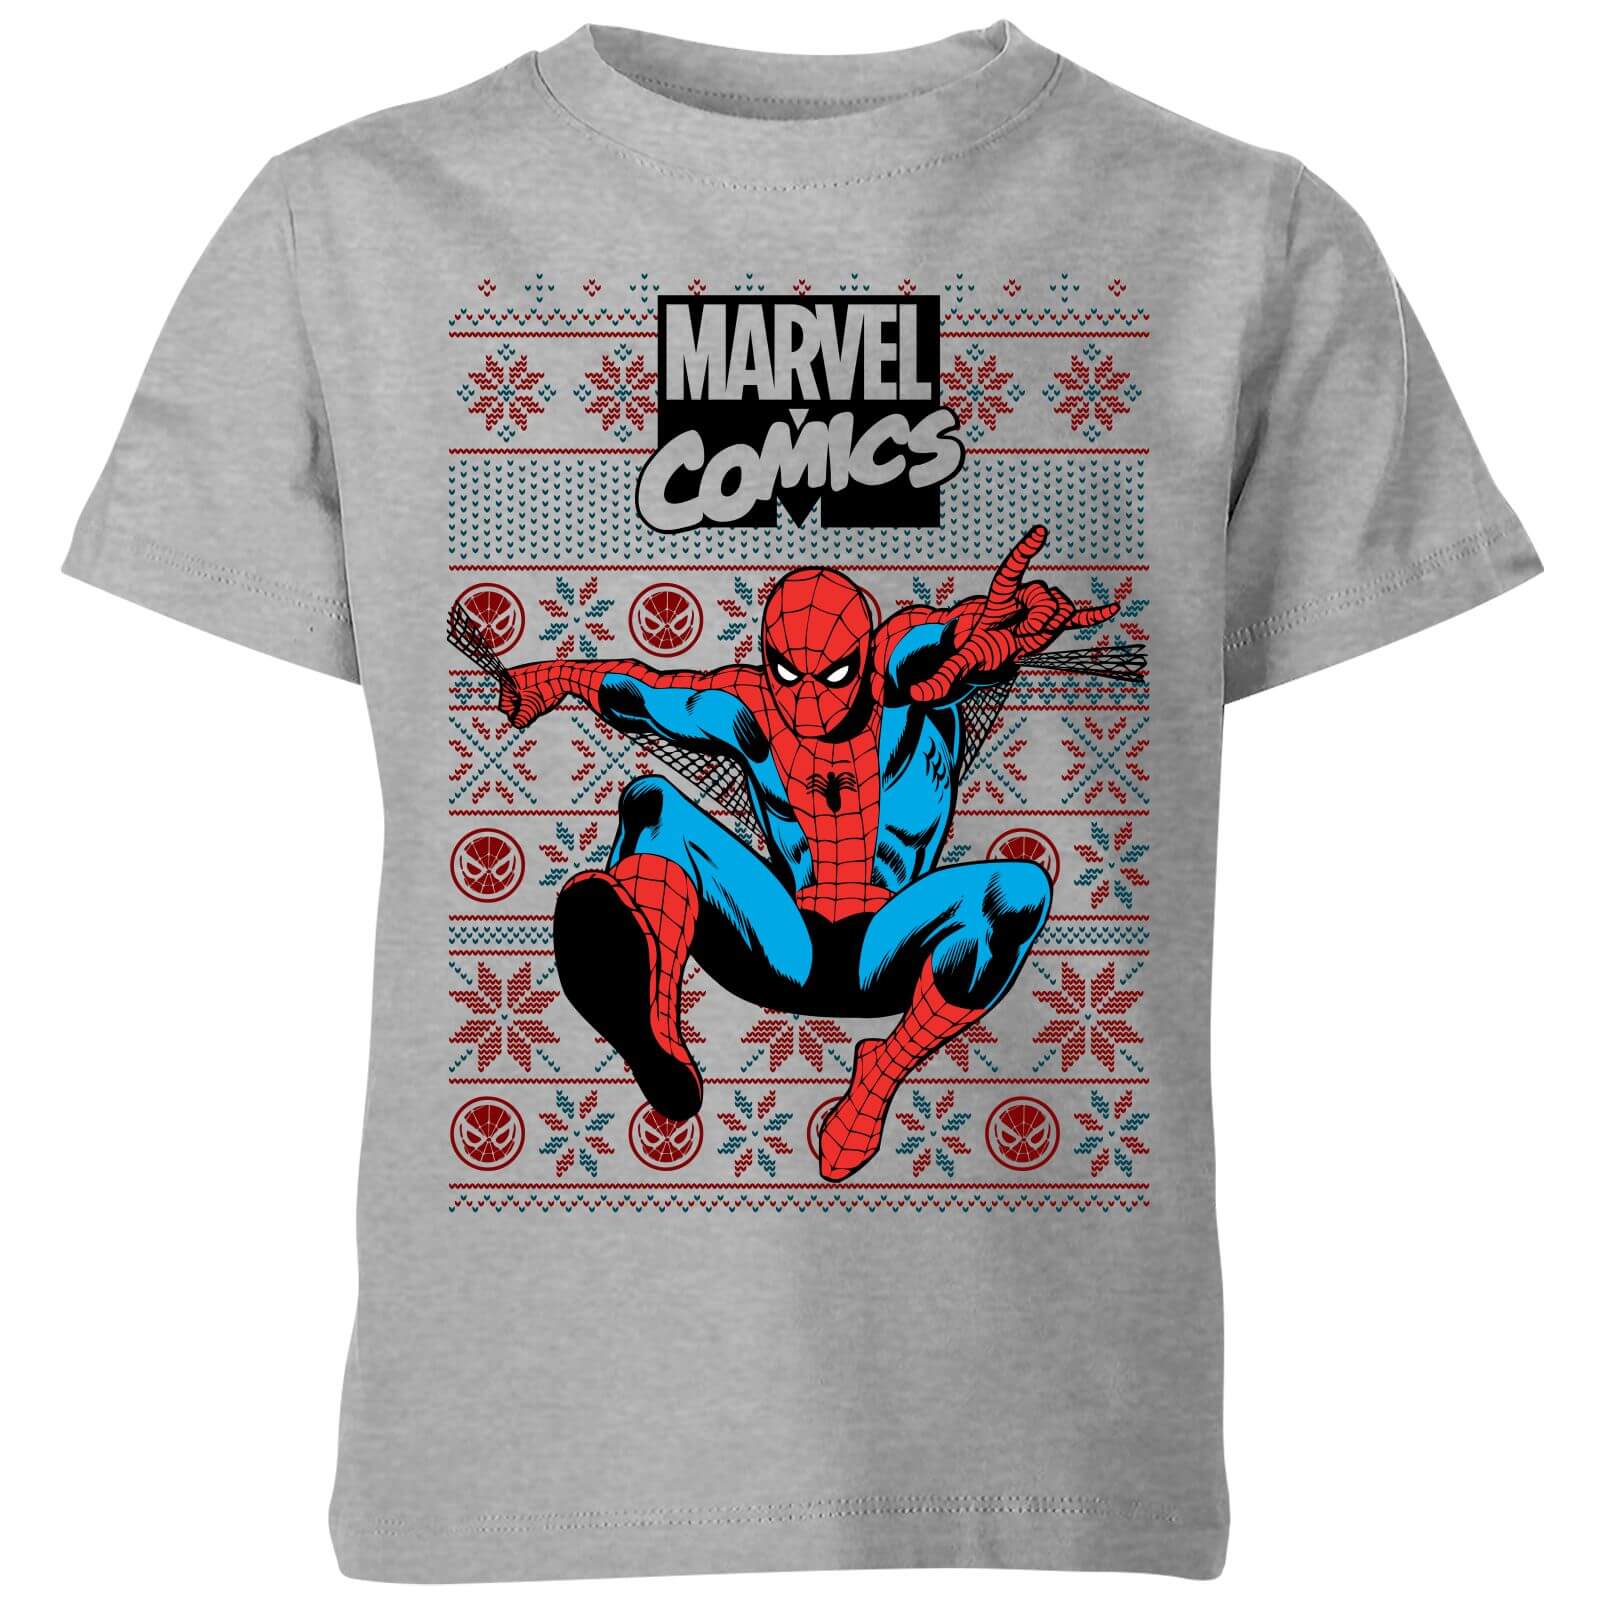 Marvel Avengers Classic Spider Man Kids Christmas T Shirt   Grey   11 12 Years